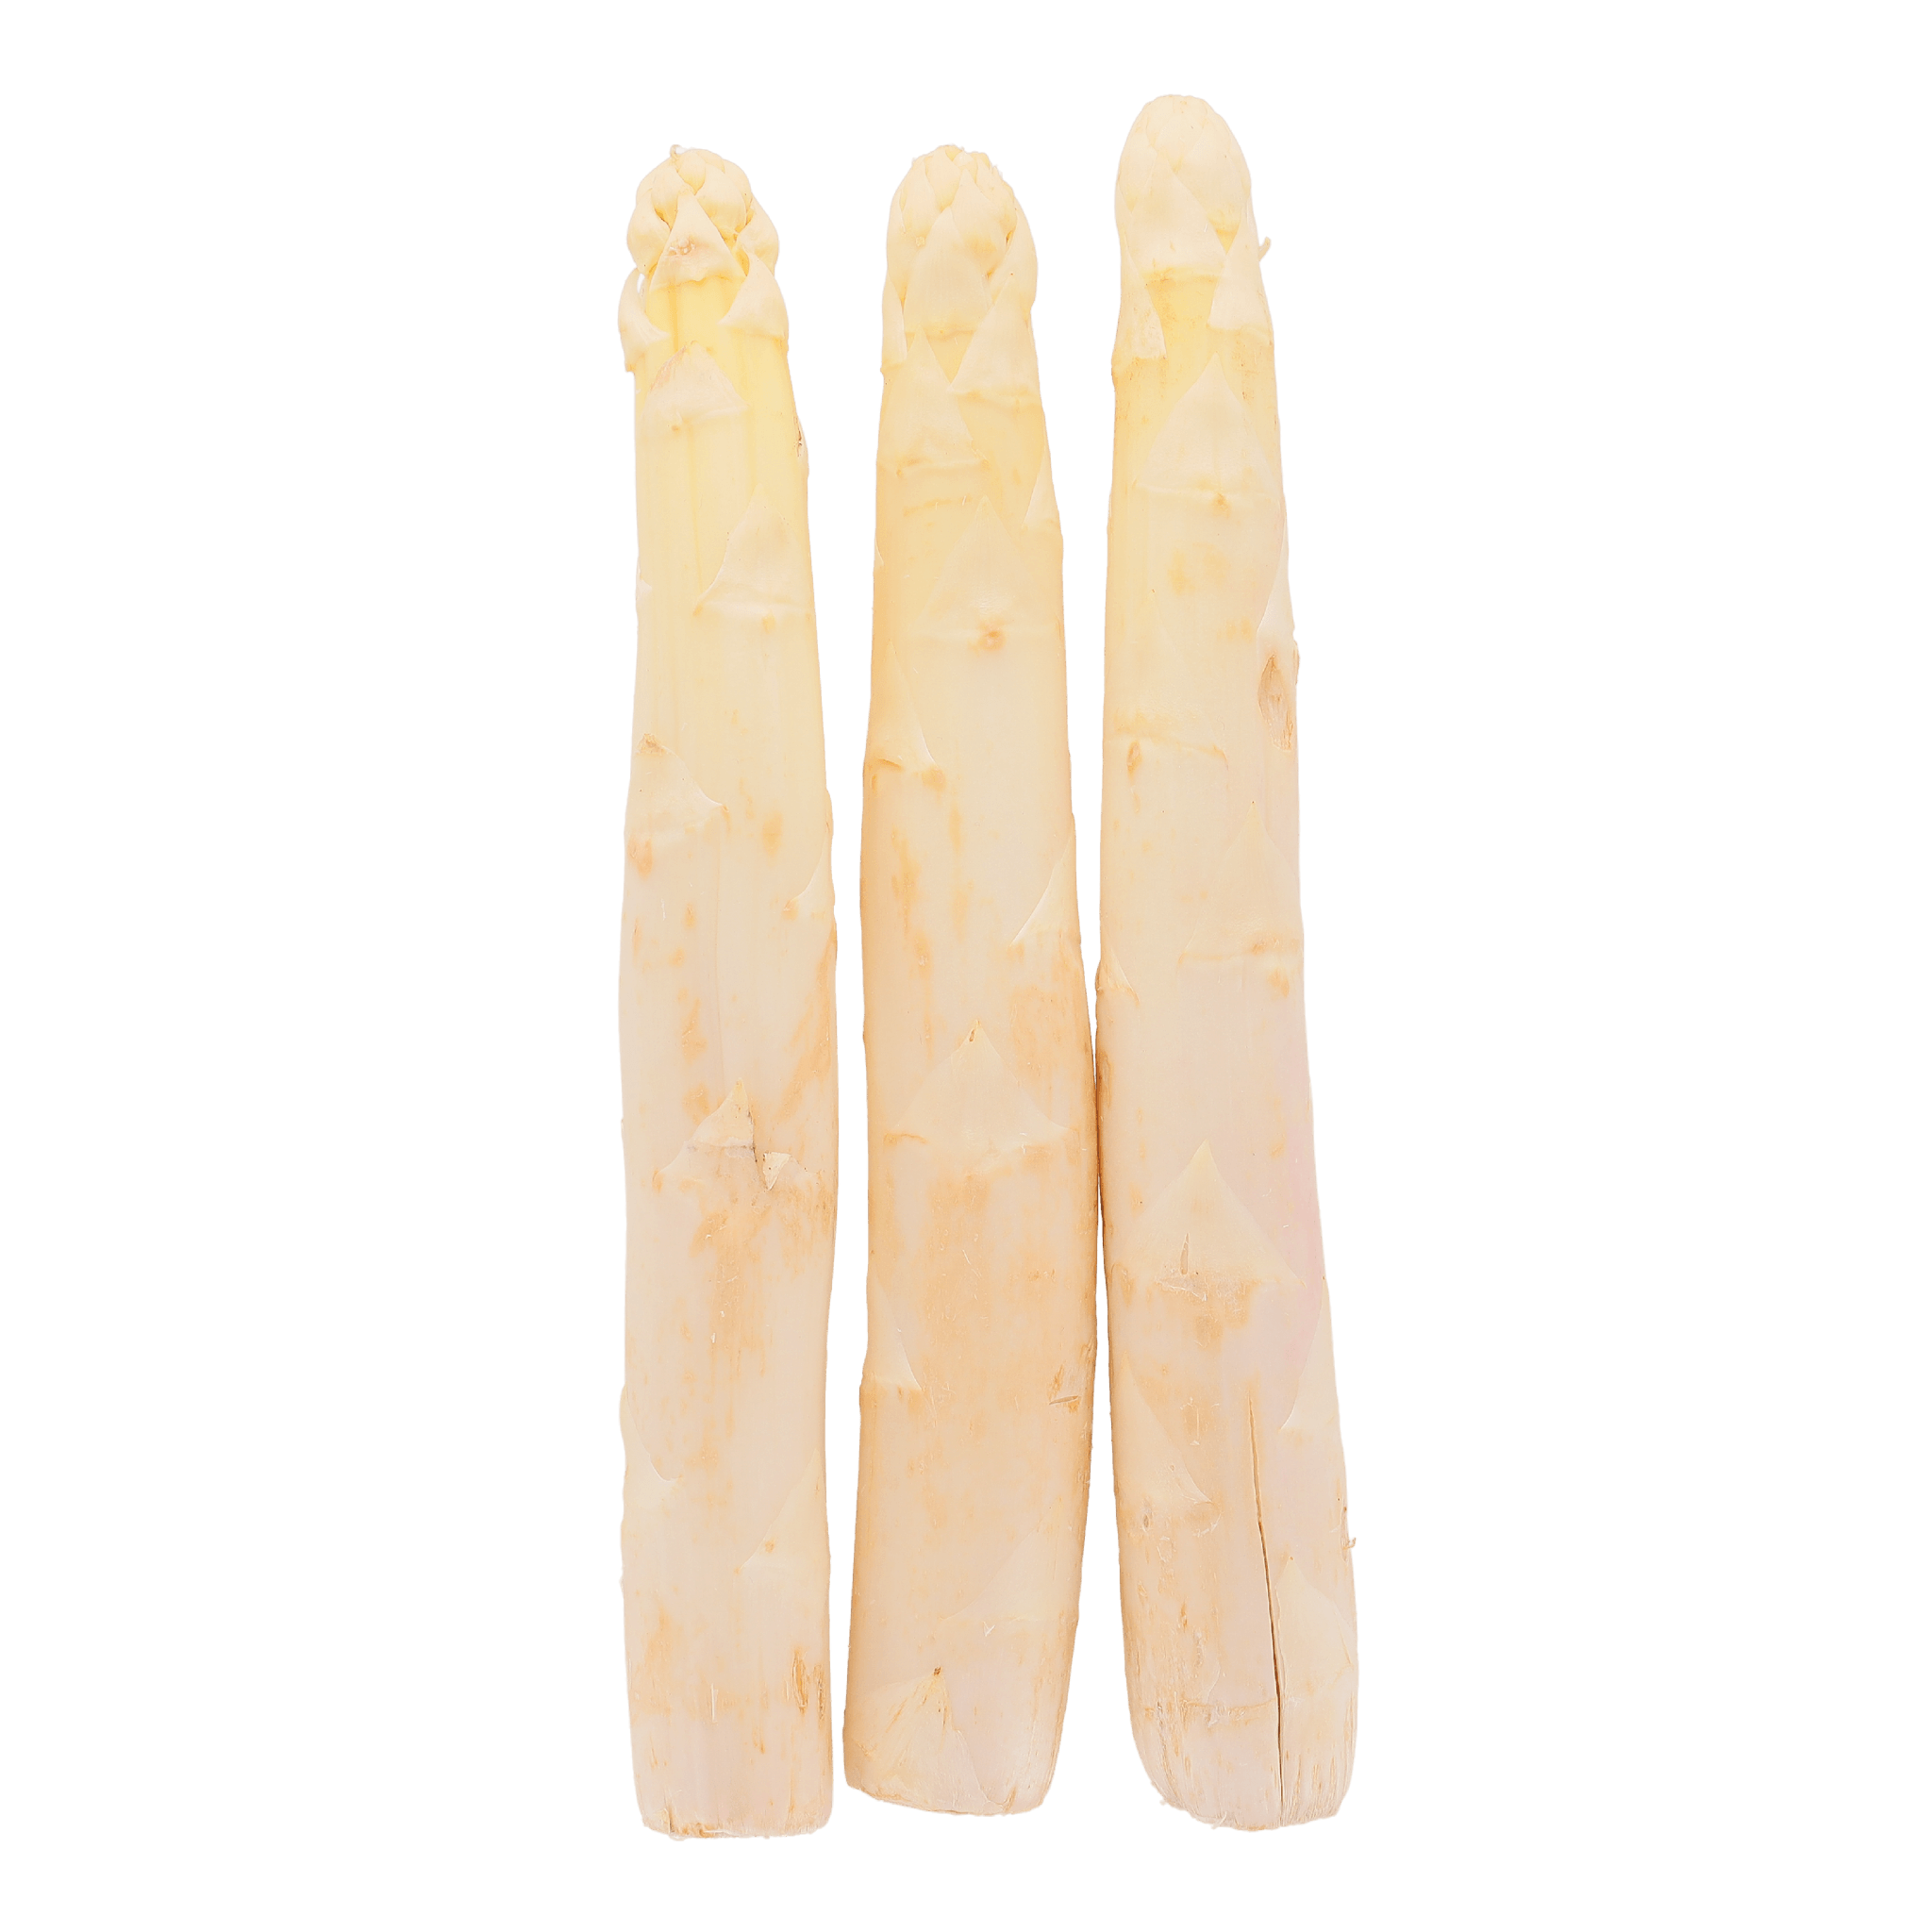 Organic Large White Asparagus - Savory Gourmet